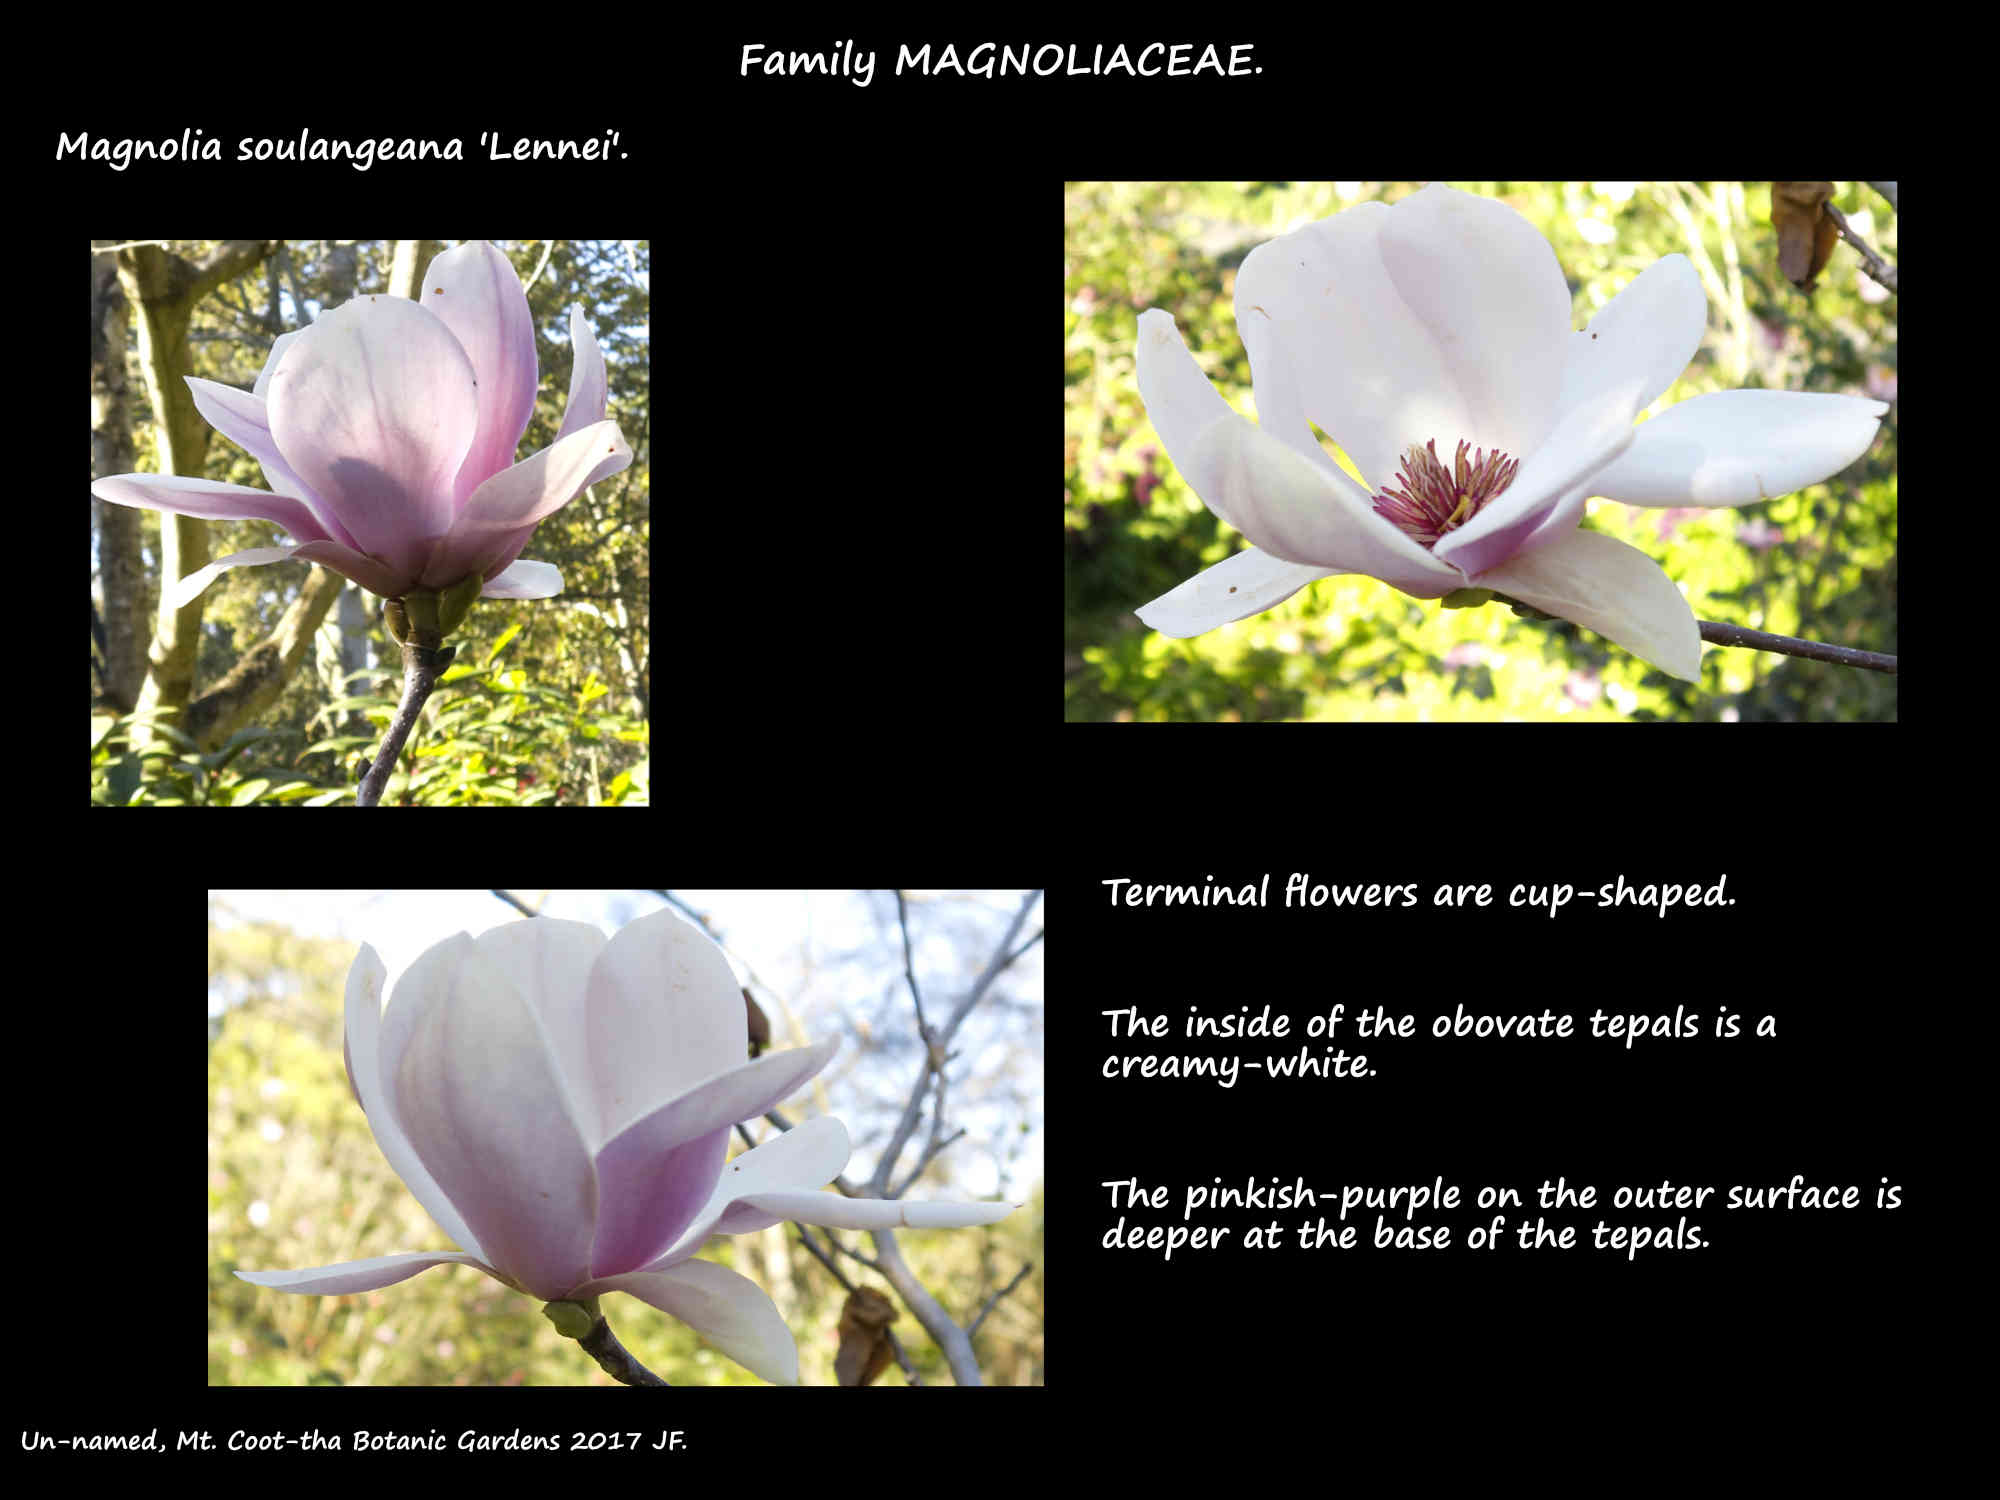 3 Magnolia soulangeana 'Lennei'